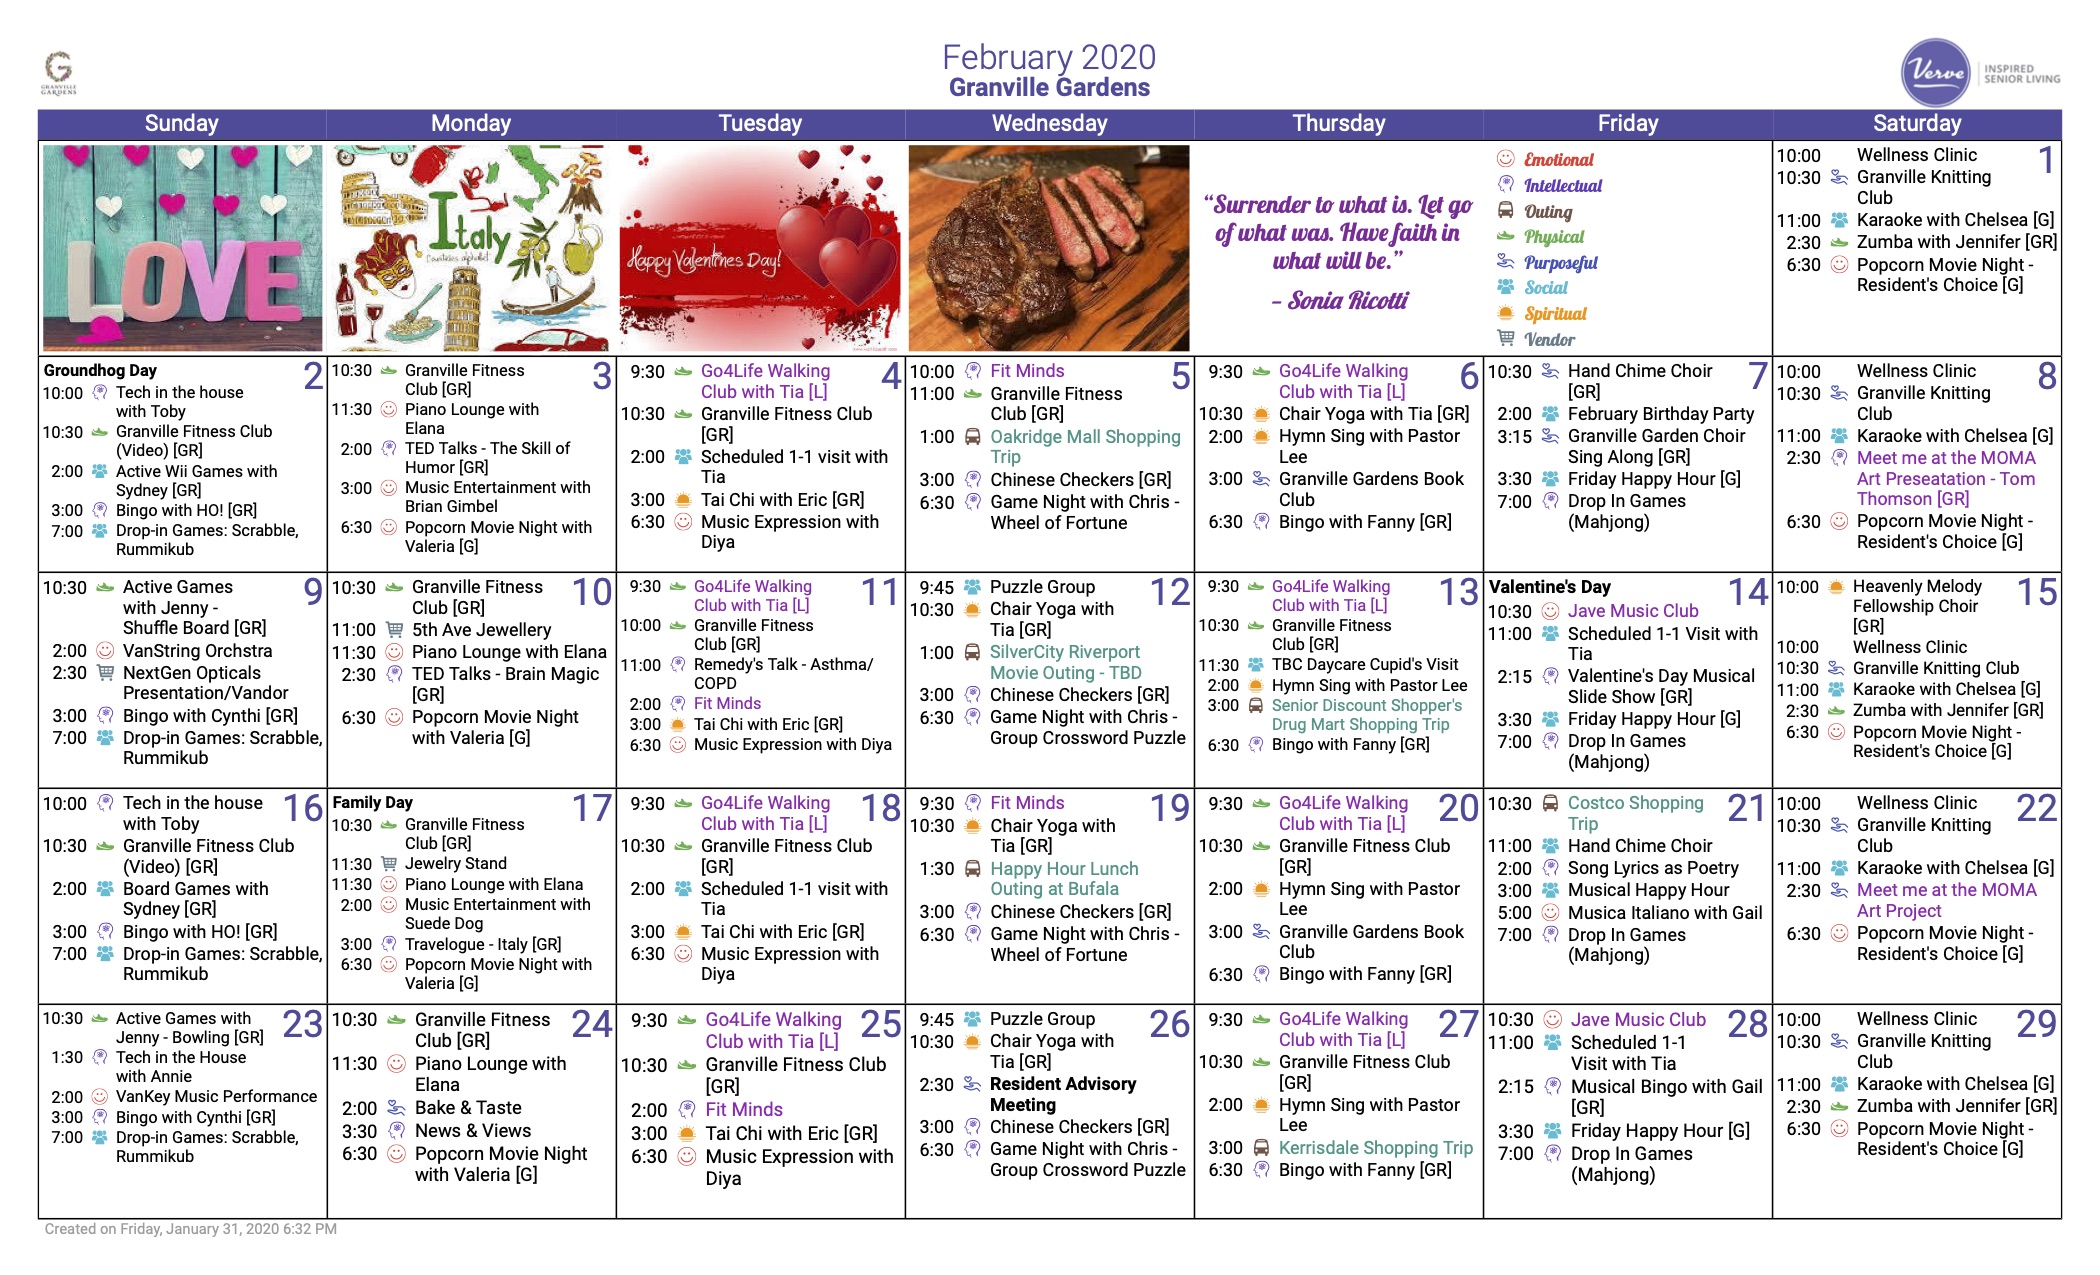 February 2020 activity calendar